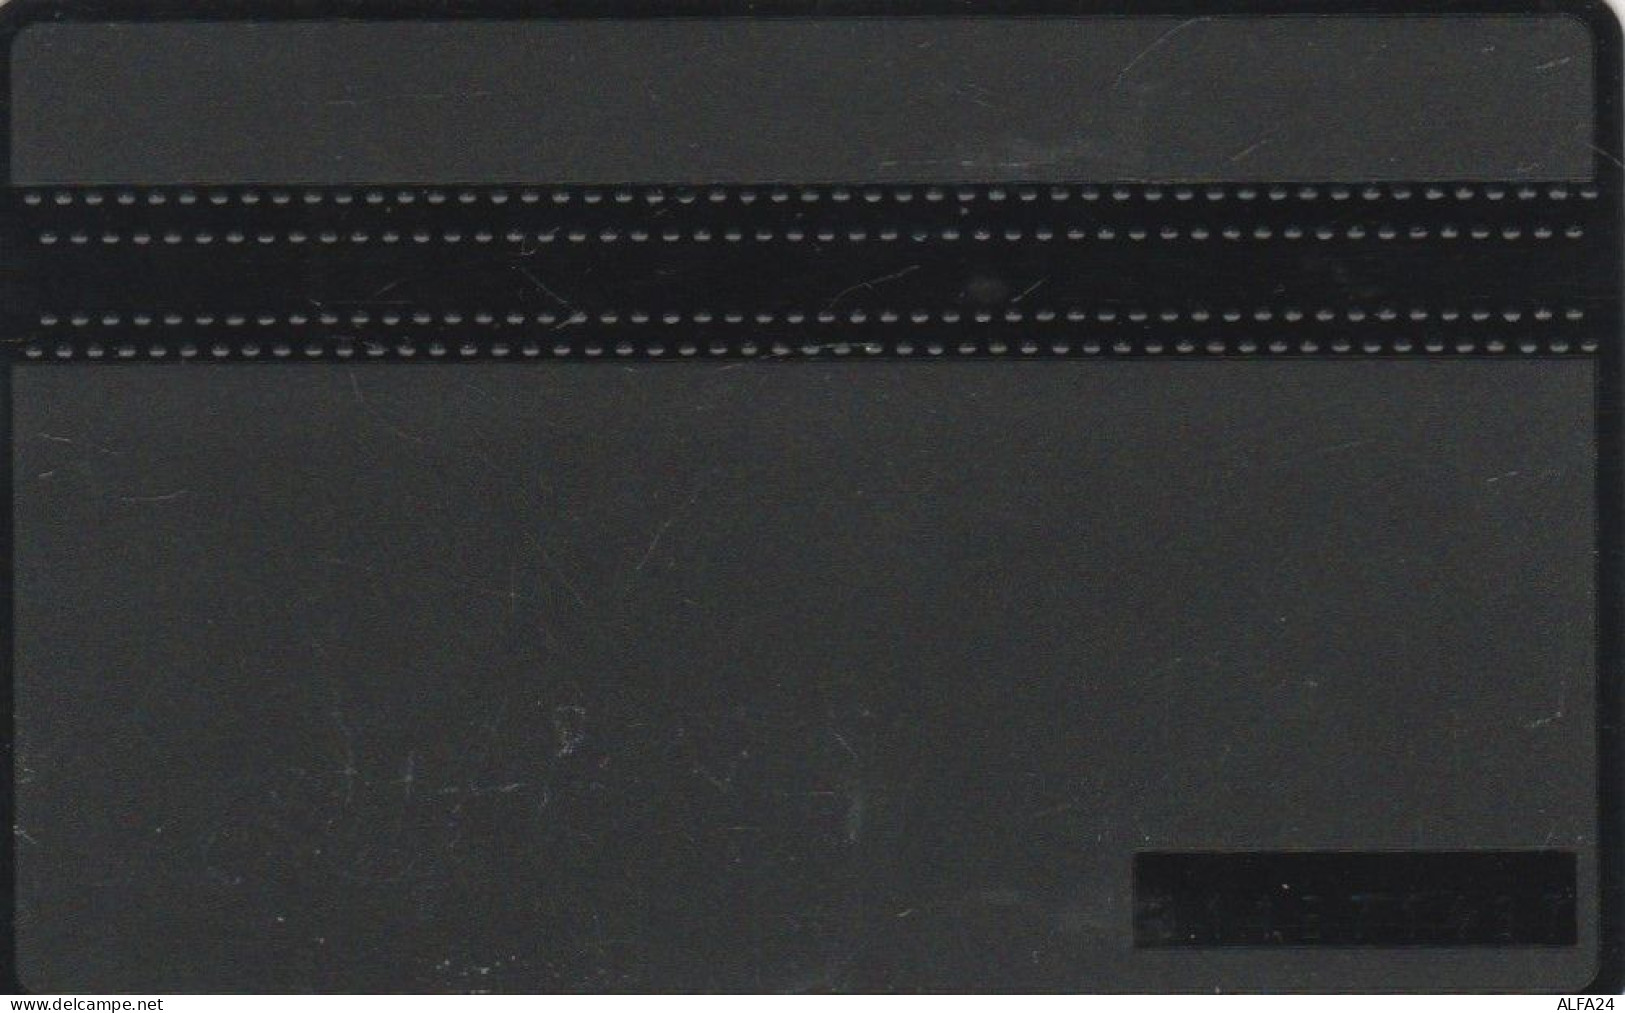 PHONE CARD BELGIO LANDIS (CK6014 - Senza Chip